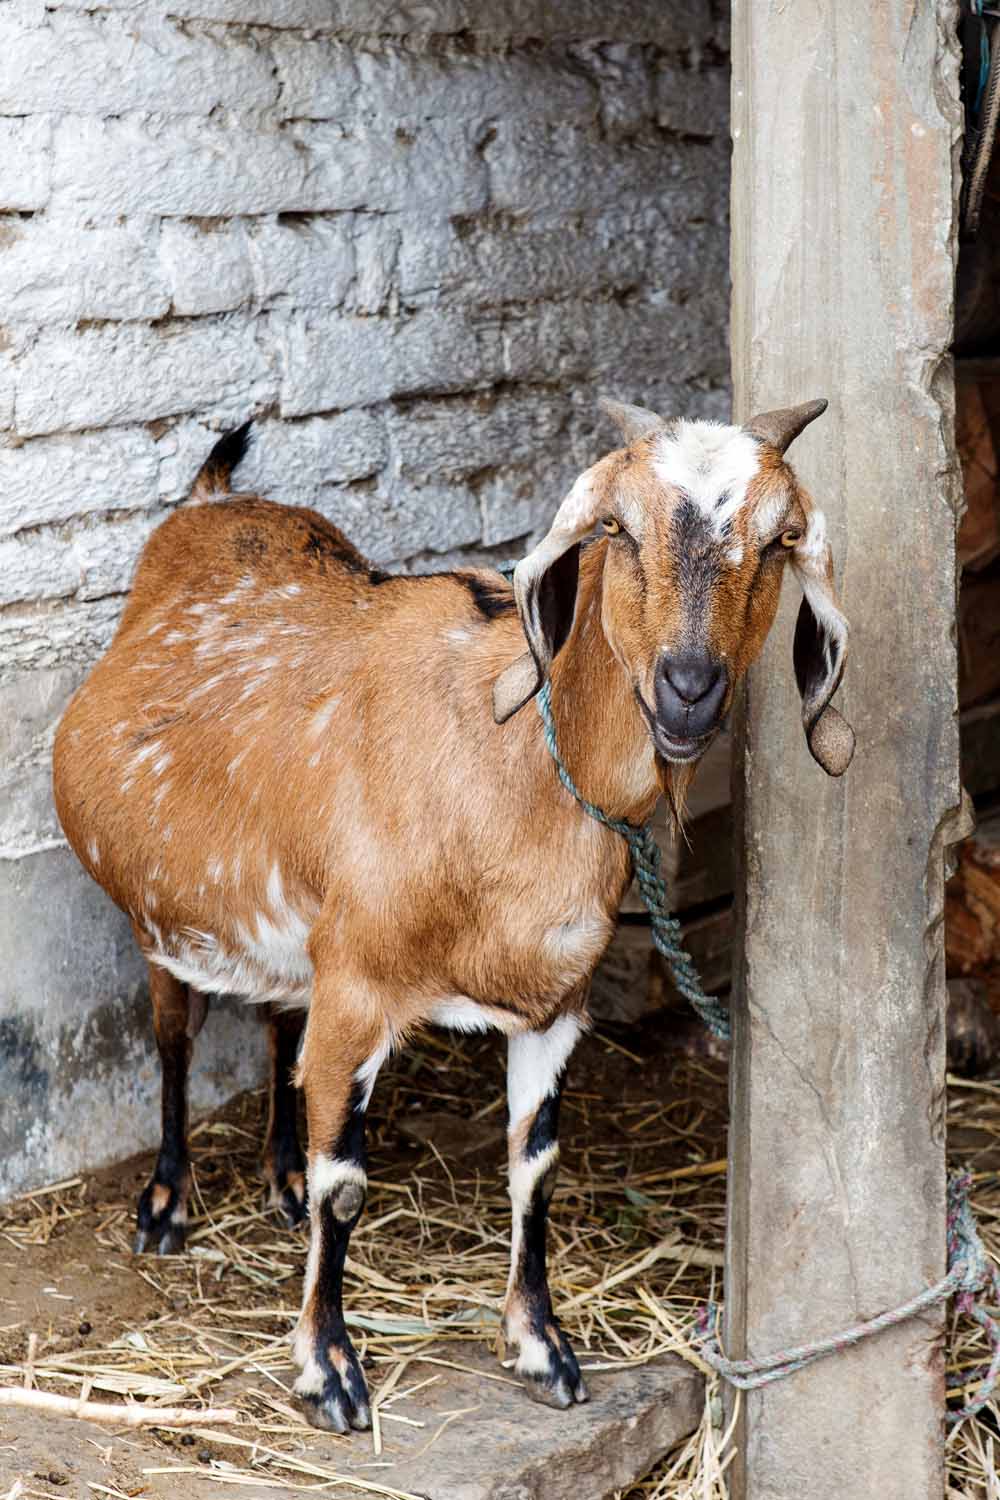 A micro loan goat